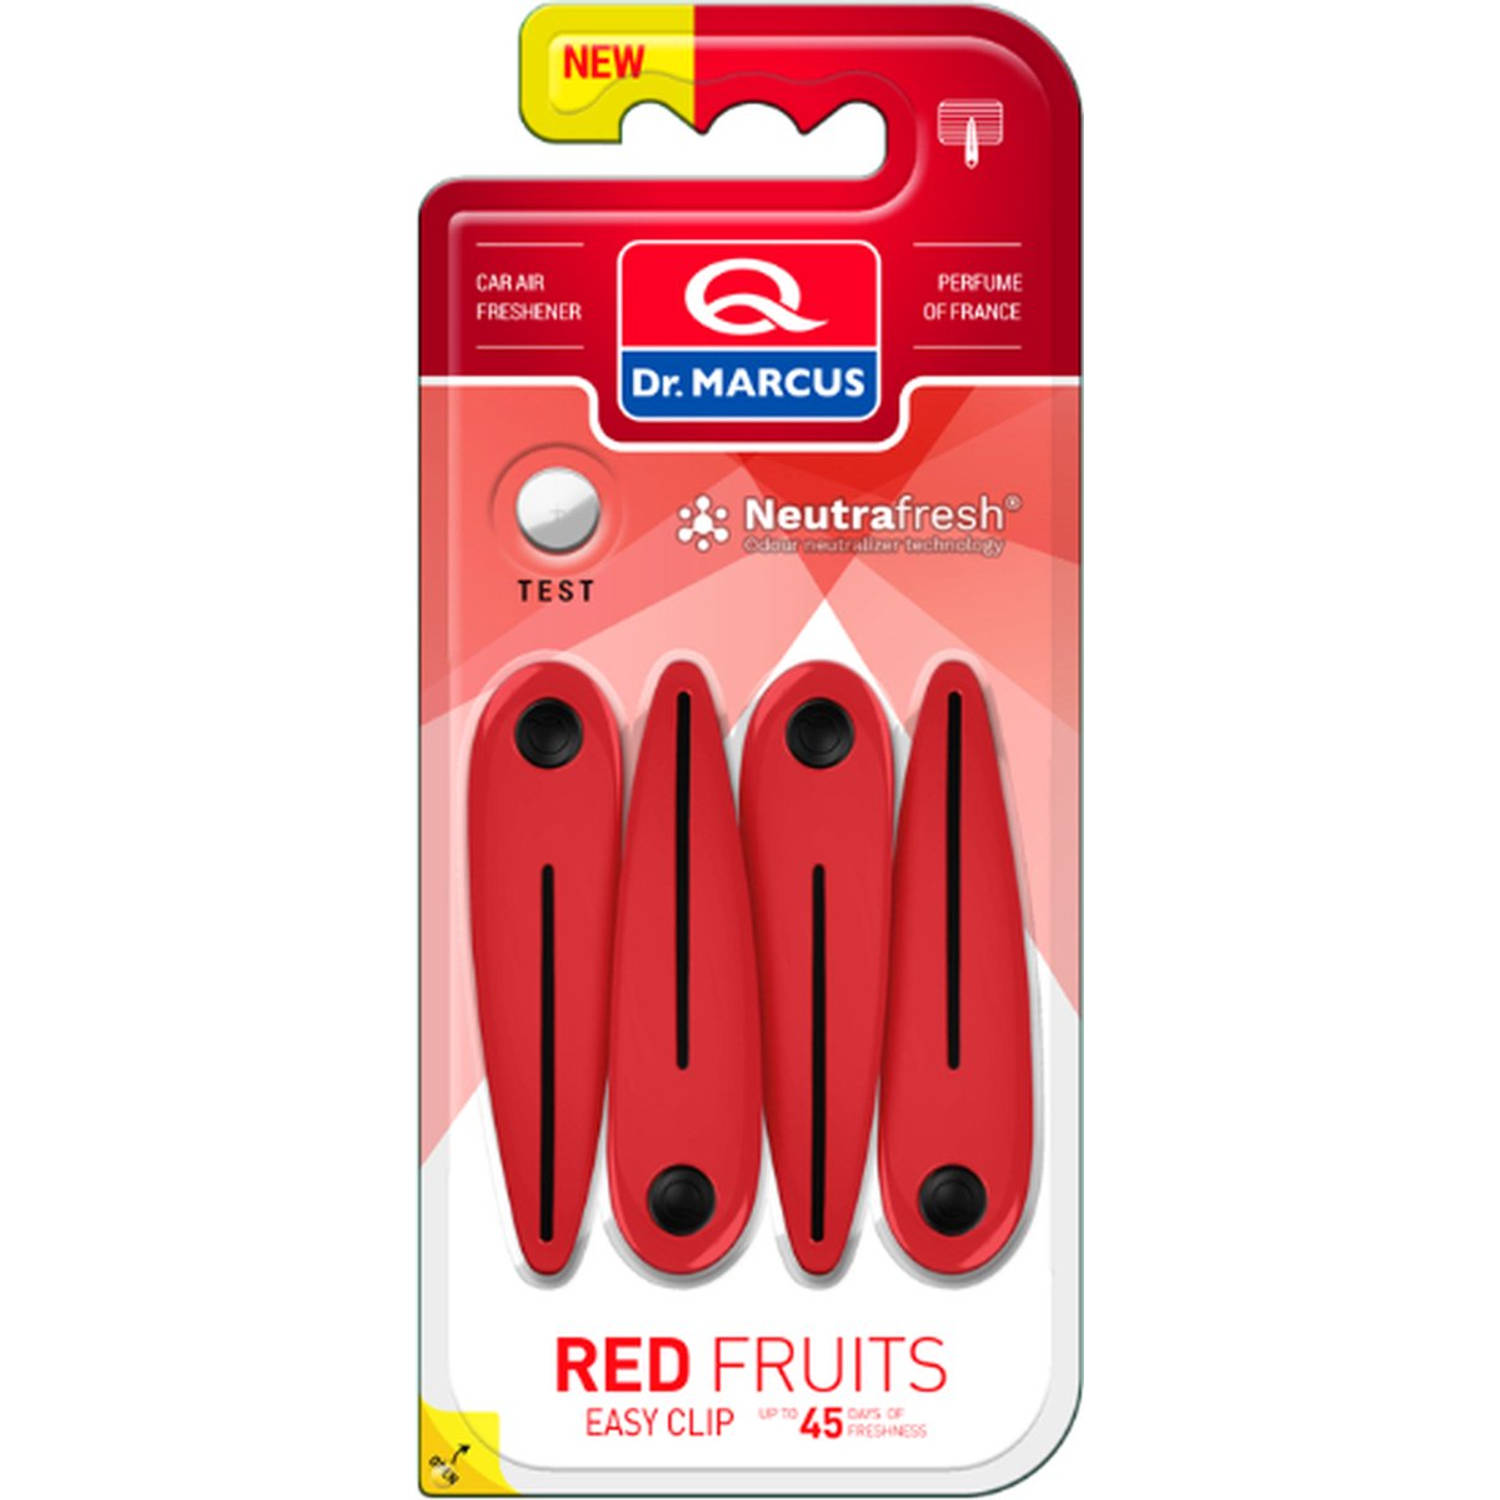 Dr. Marcus Easy Clip Red Fruits luchtverfrisser met neutrafresh technologie 4 clips voor 4 sterktes